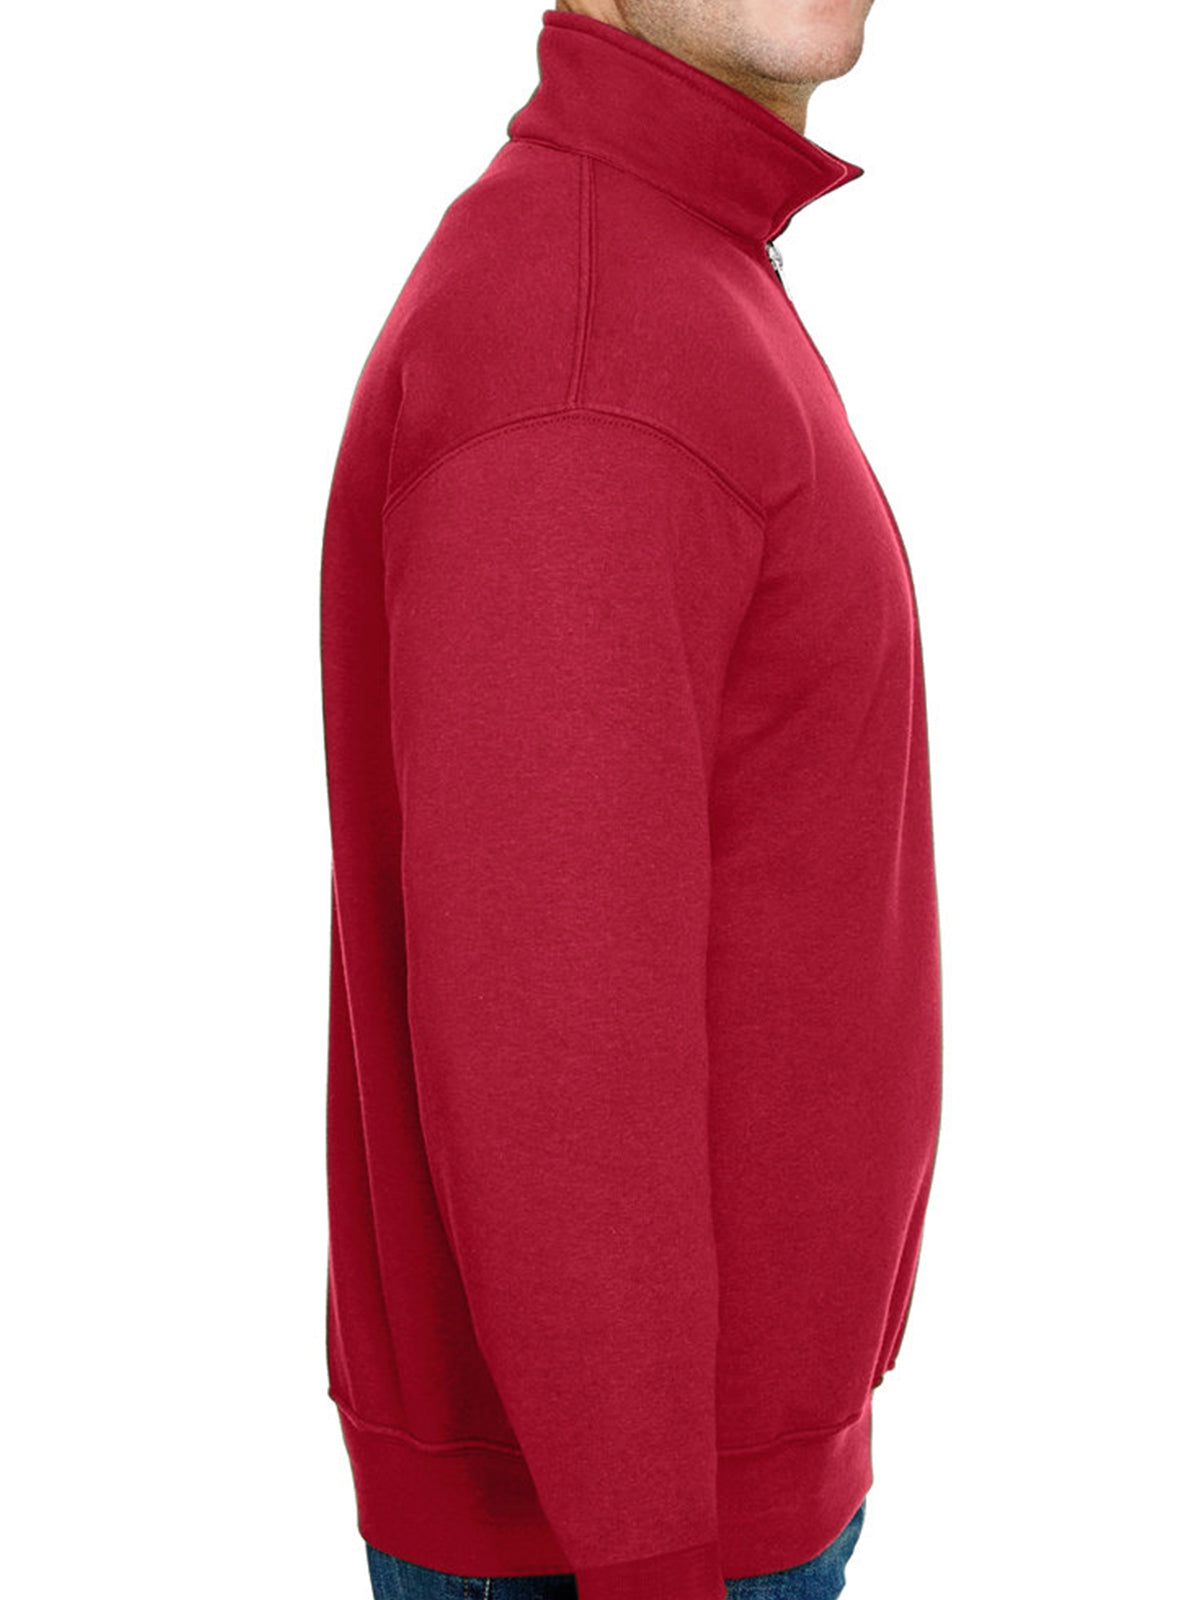 Unisex Quarter-Zip Pullover Sweatshirt